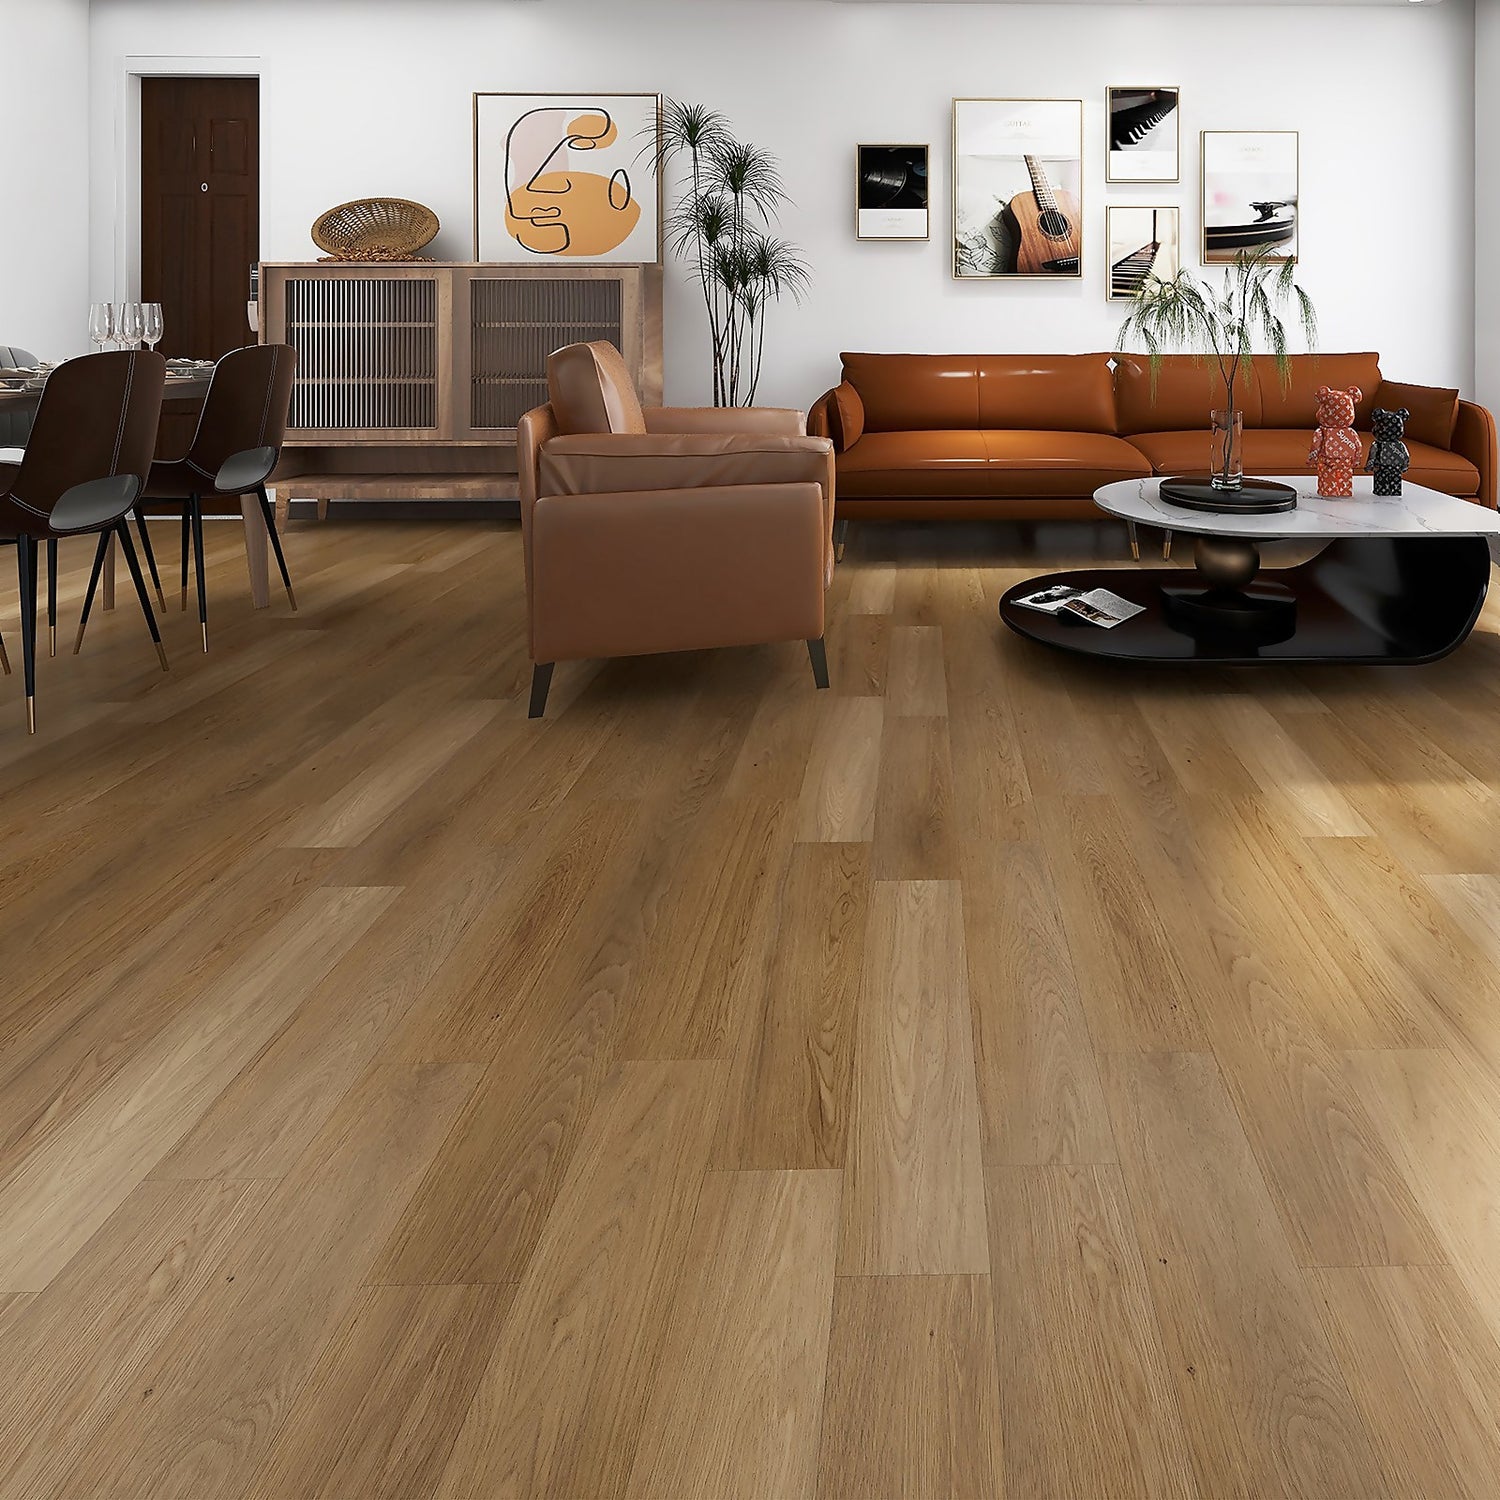 Rigid Core Luxury Vinyl Flooring Natural Oak Effect Homebase